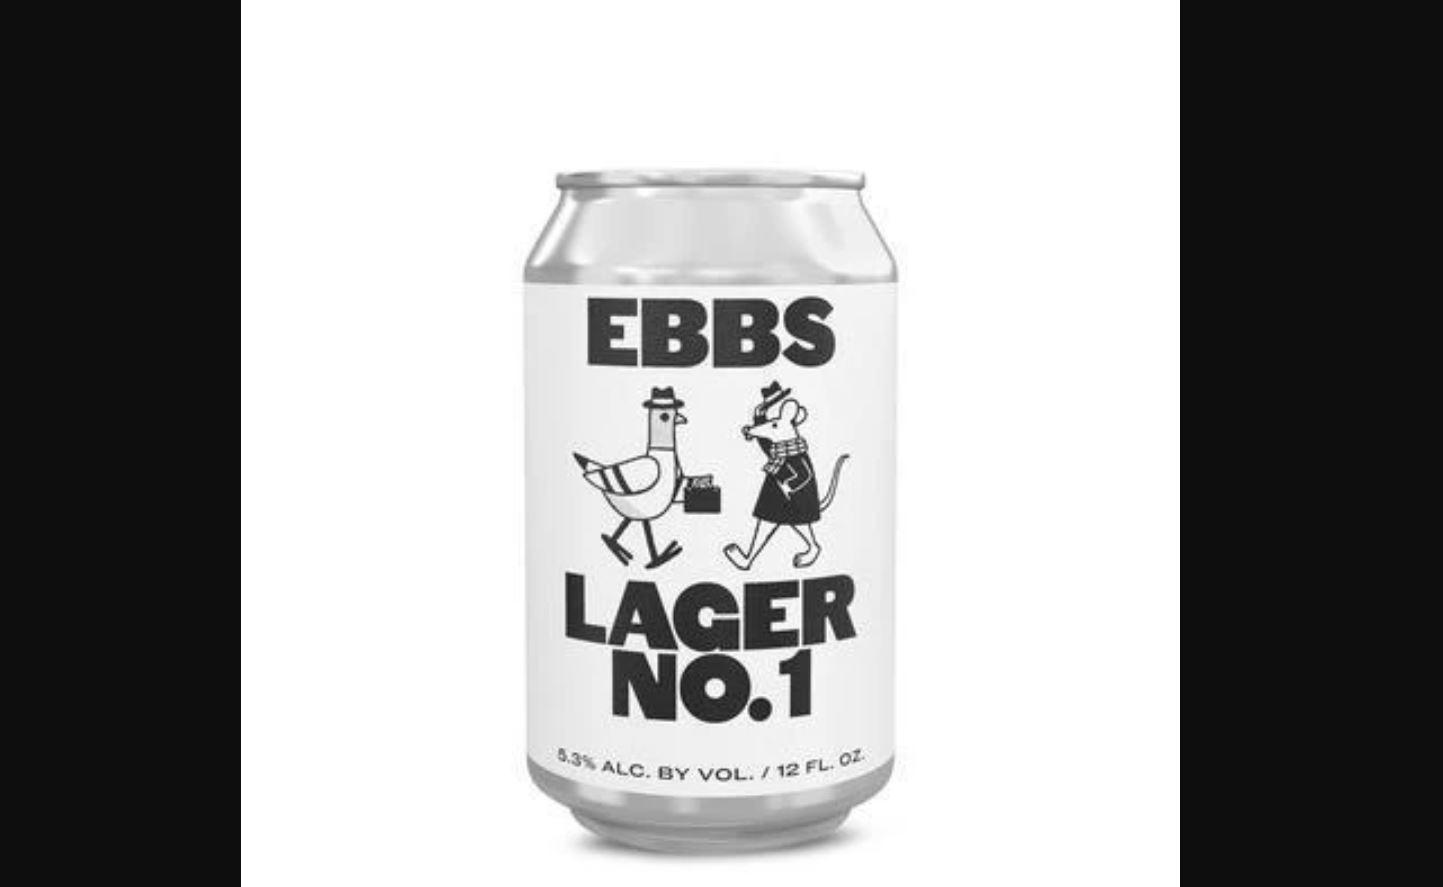 Ebbs Lager No. 3